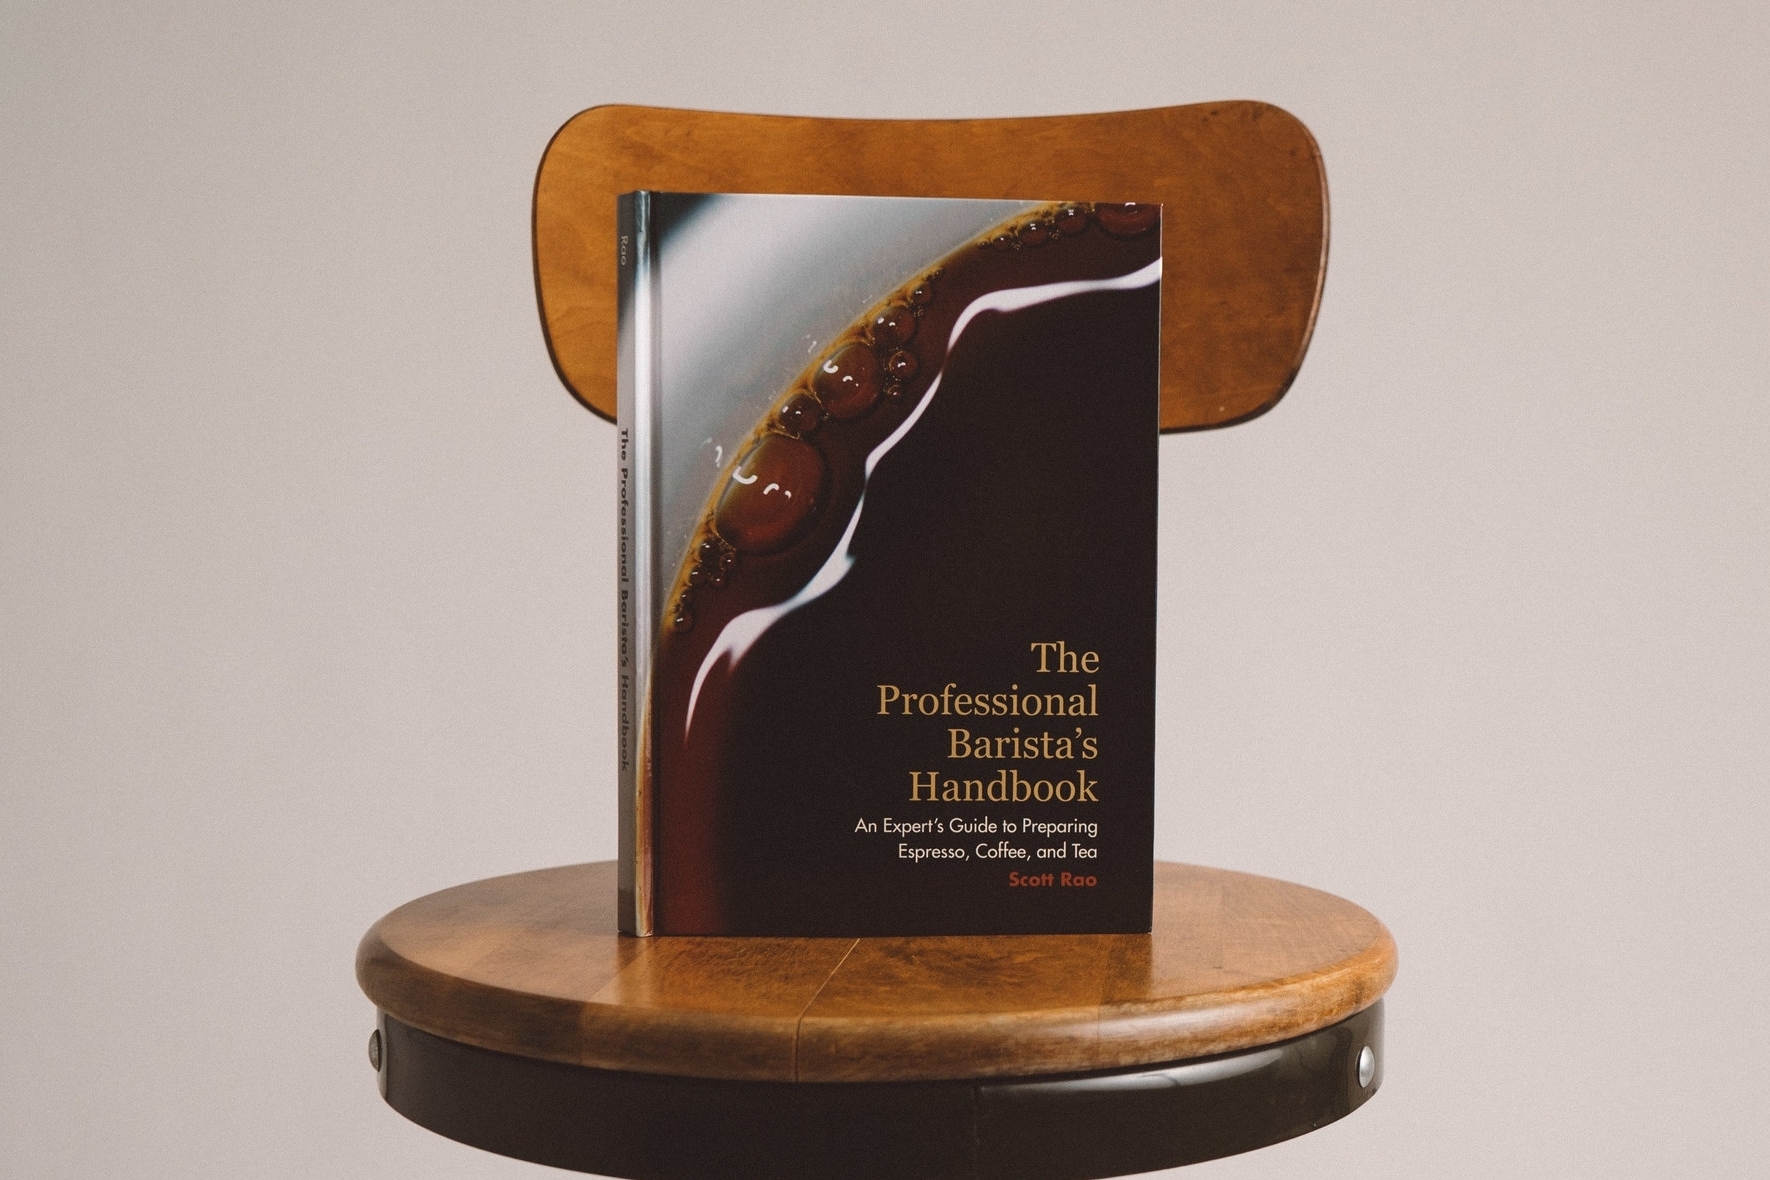 Copy of The Professional Barista's Handbook